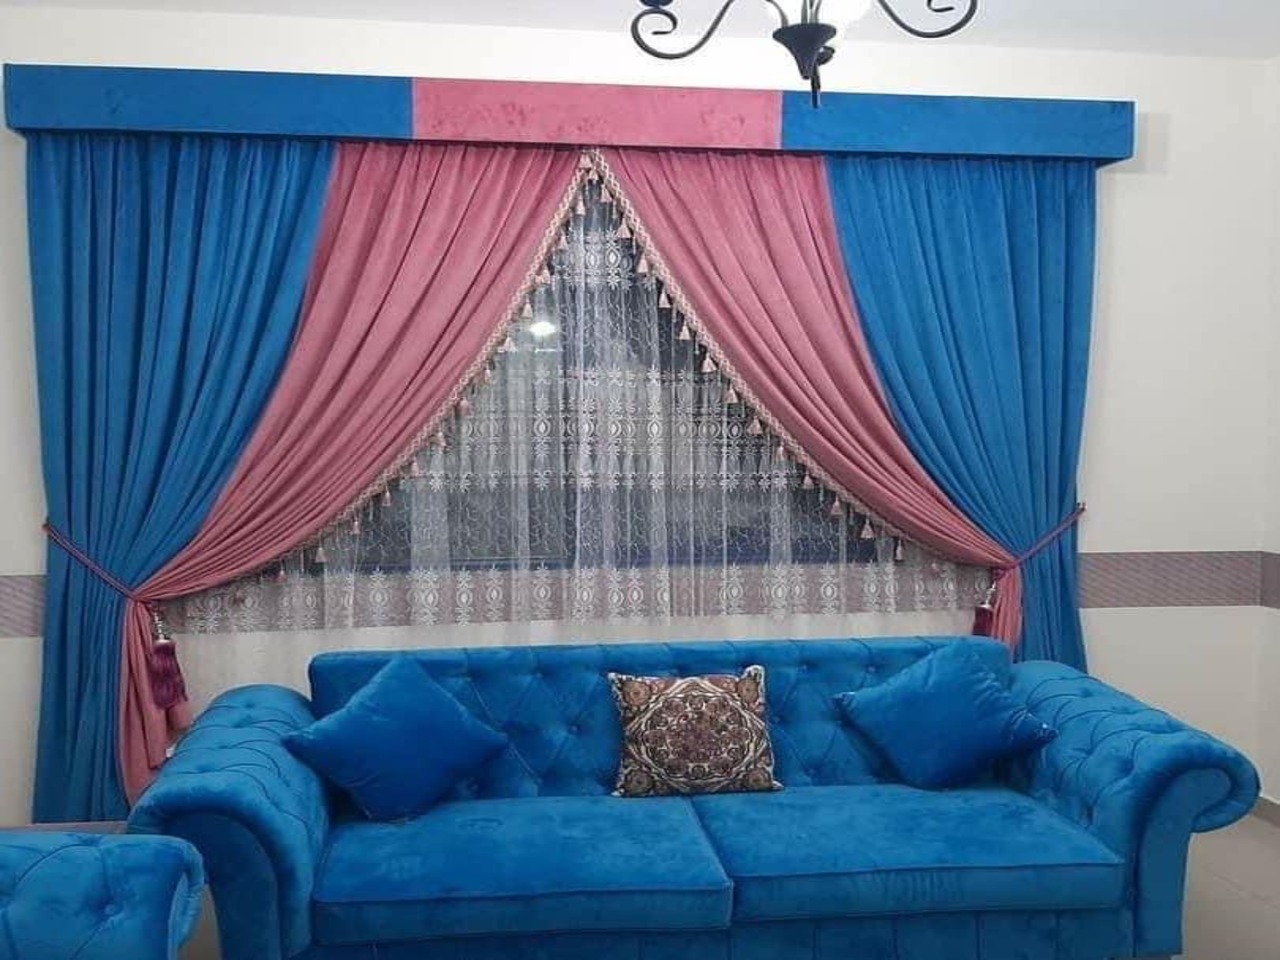 Bedroom Curtains Dubai